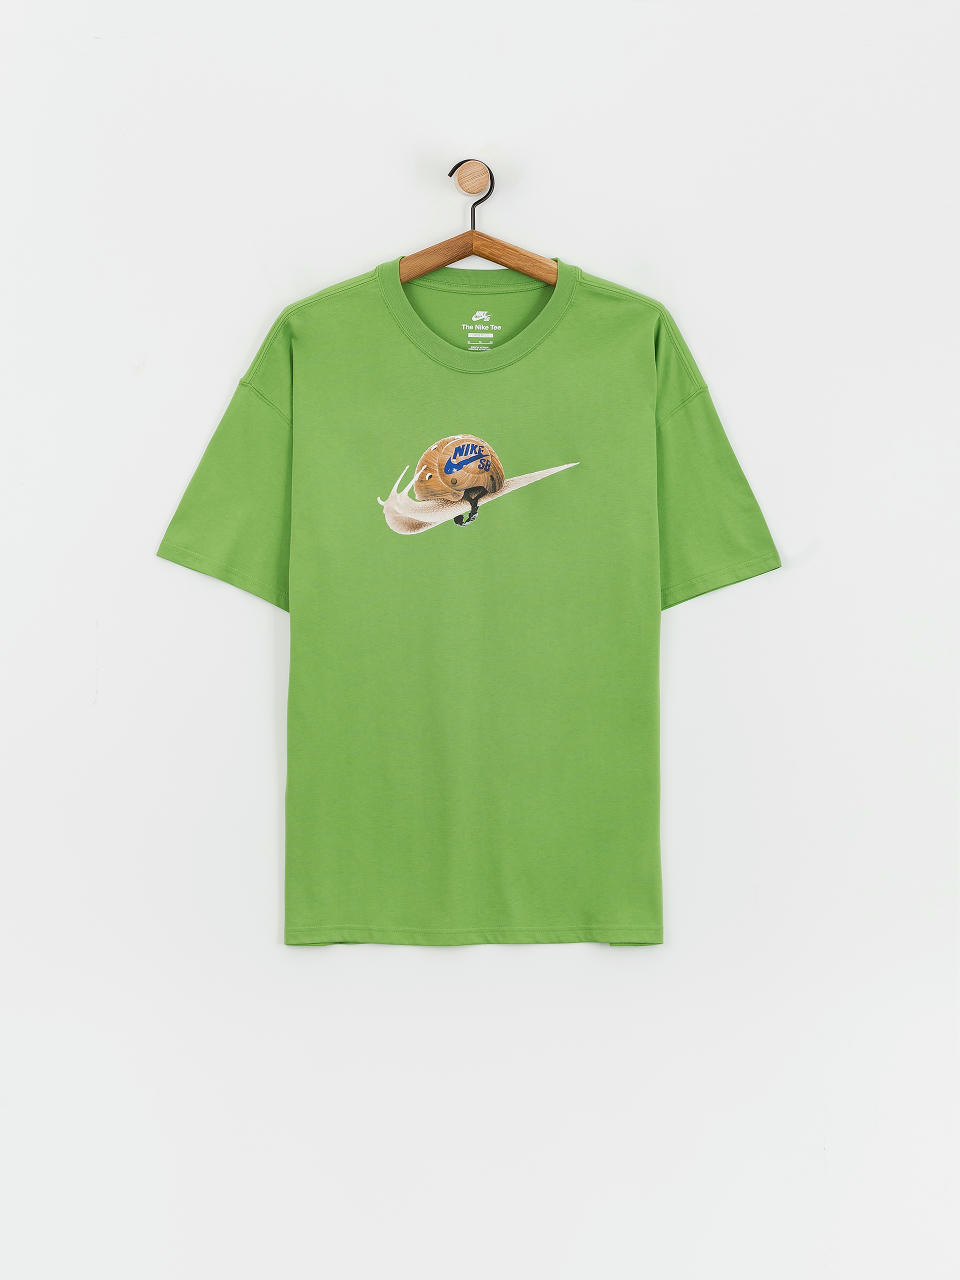 T-shirt Nike SB M90 Republique (chlorophyll)